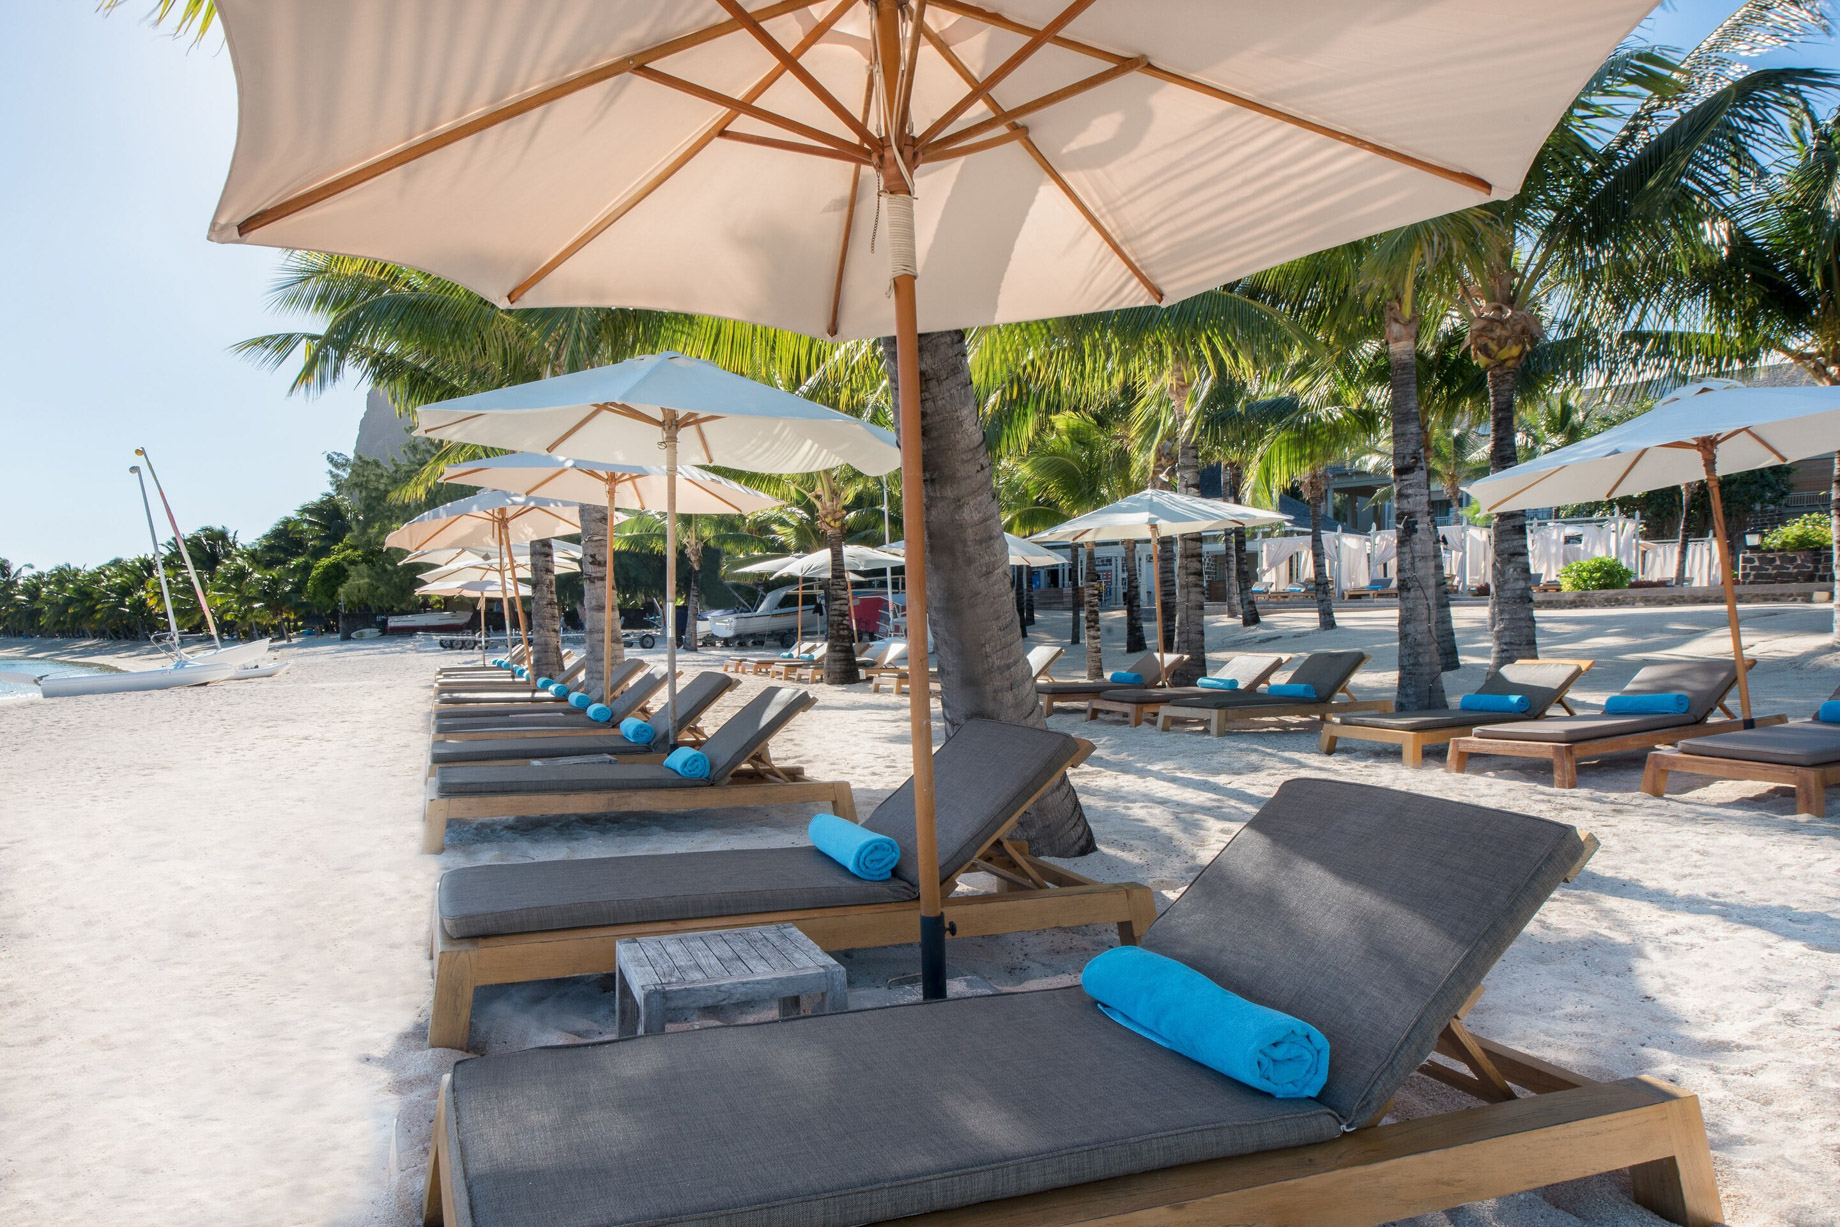 JW Marriott Mauritius Resort - Mauritius - The Beach Lounge Chairs